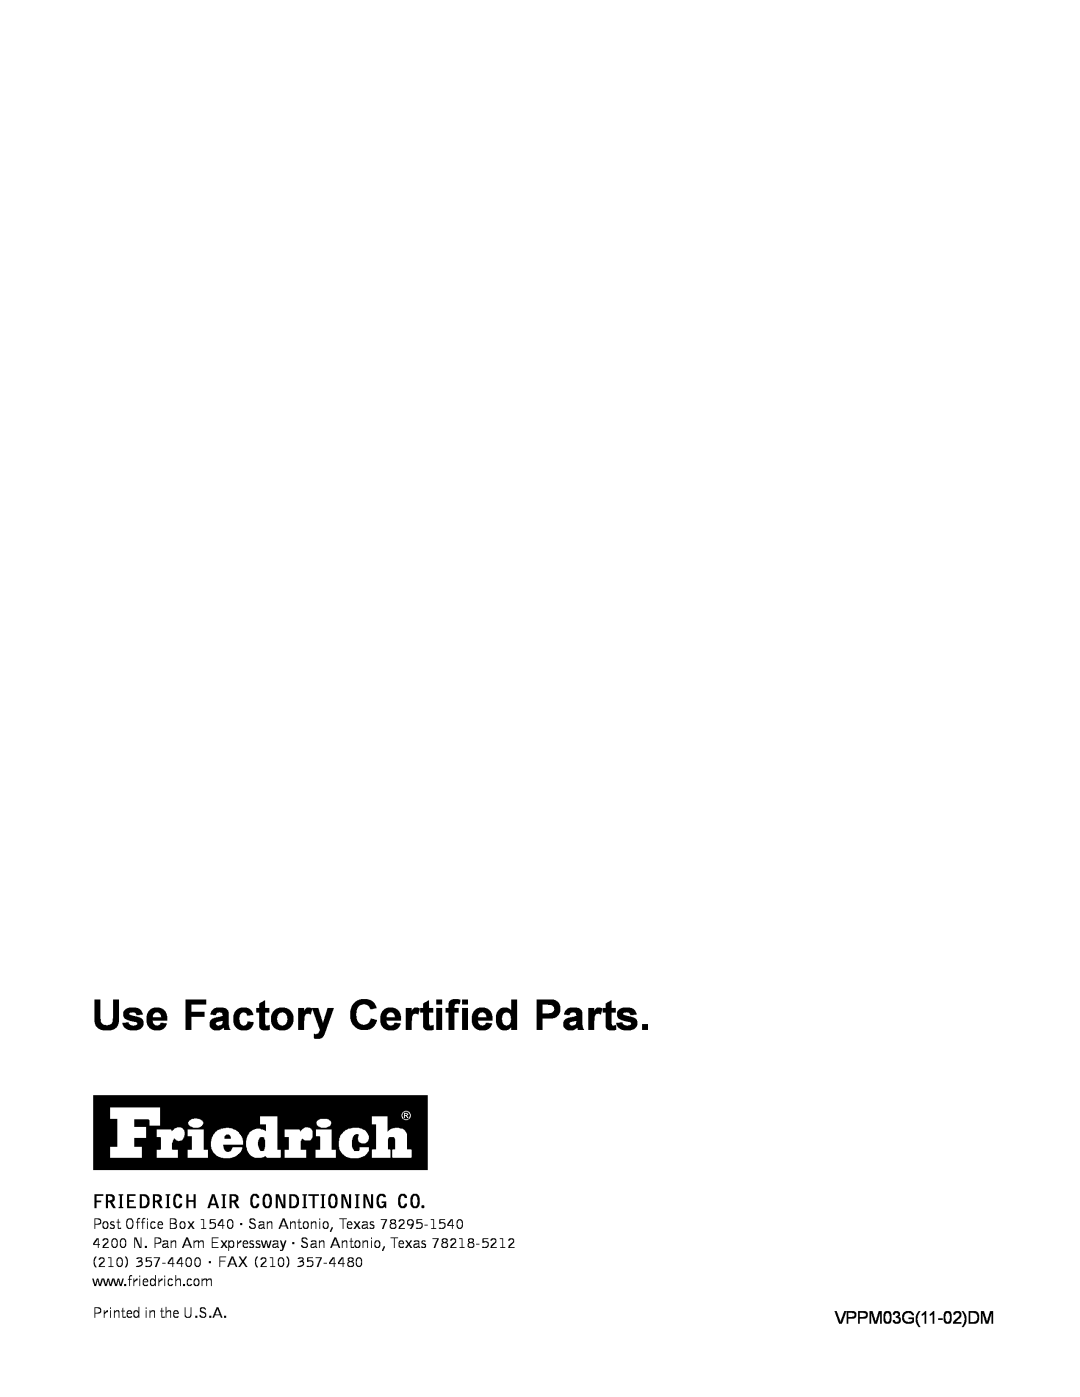 Friedrich H)A09K34**G, H)A09K25**G manual Use Factory Certified Parts, Friedrich Air Conditioning Co, VPPM03G11-02DM 